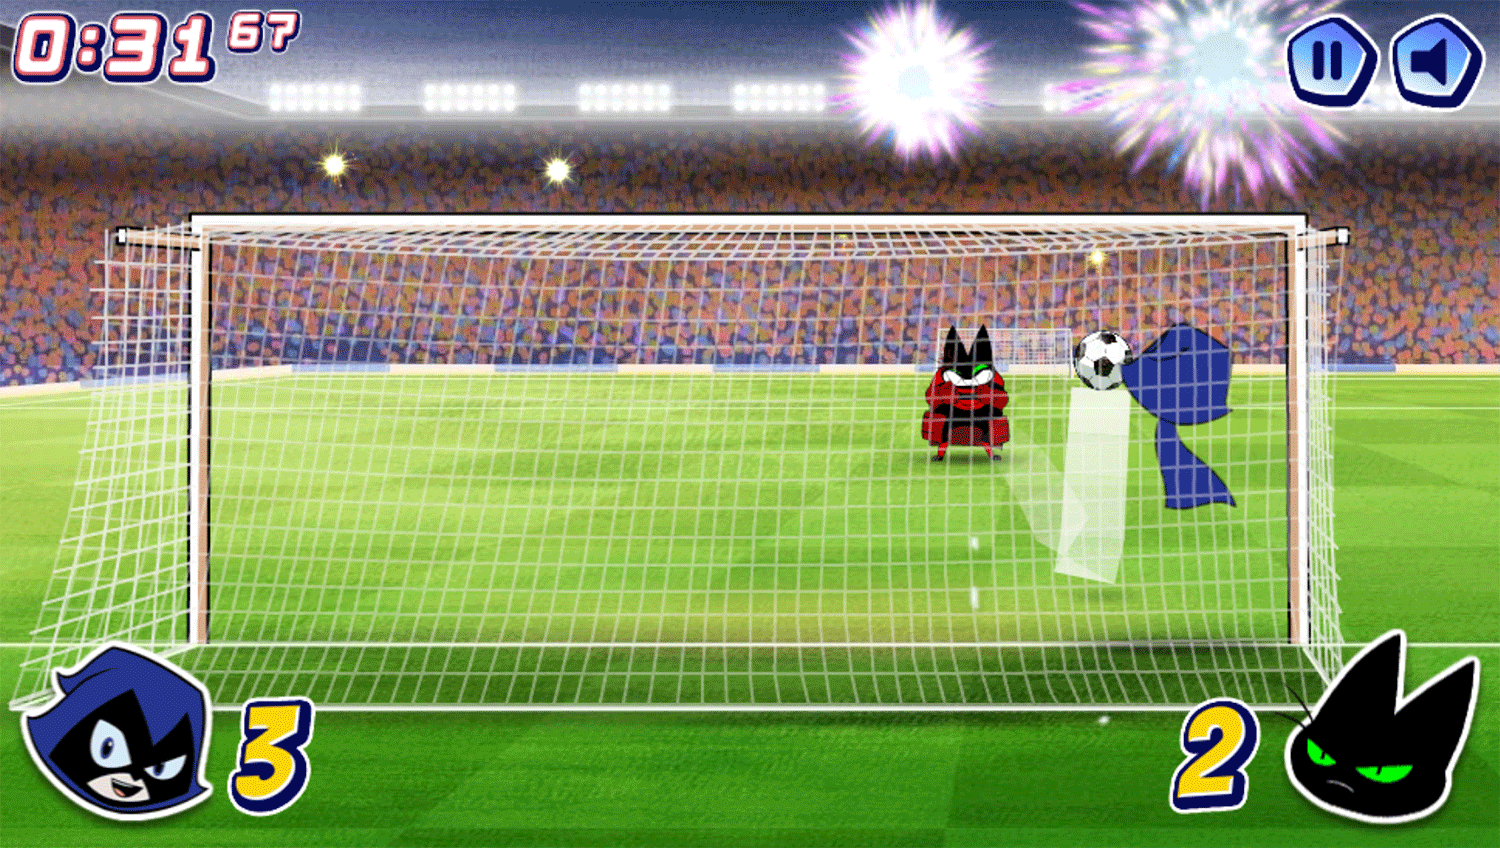 Penalty Power Game Save Screenshot.